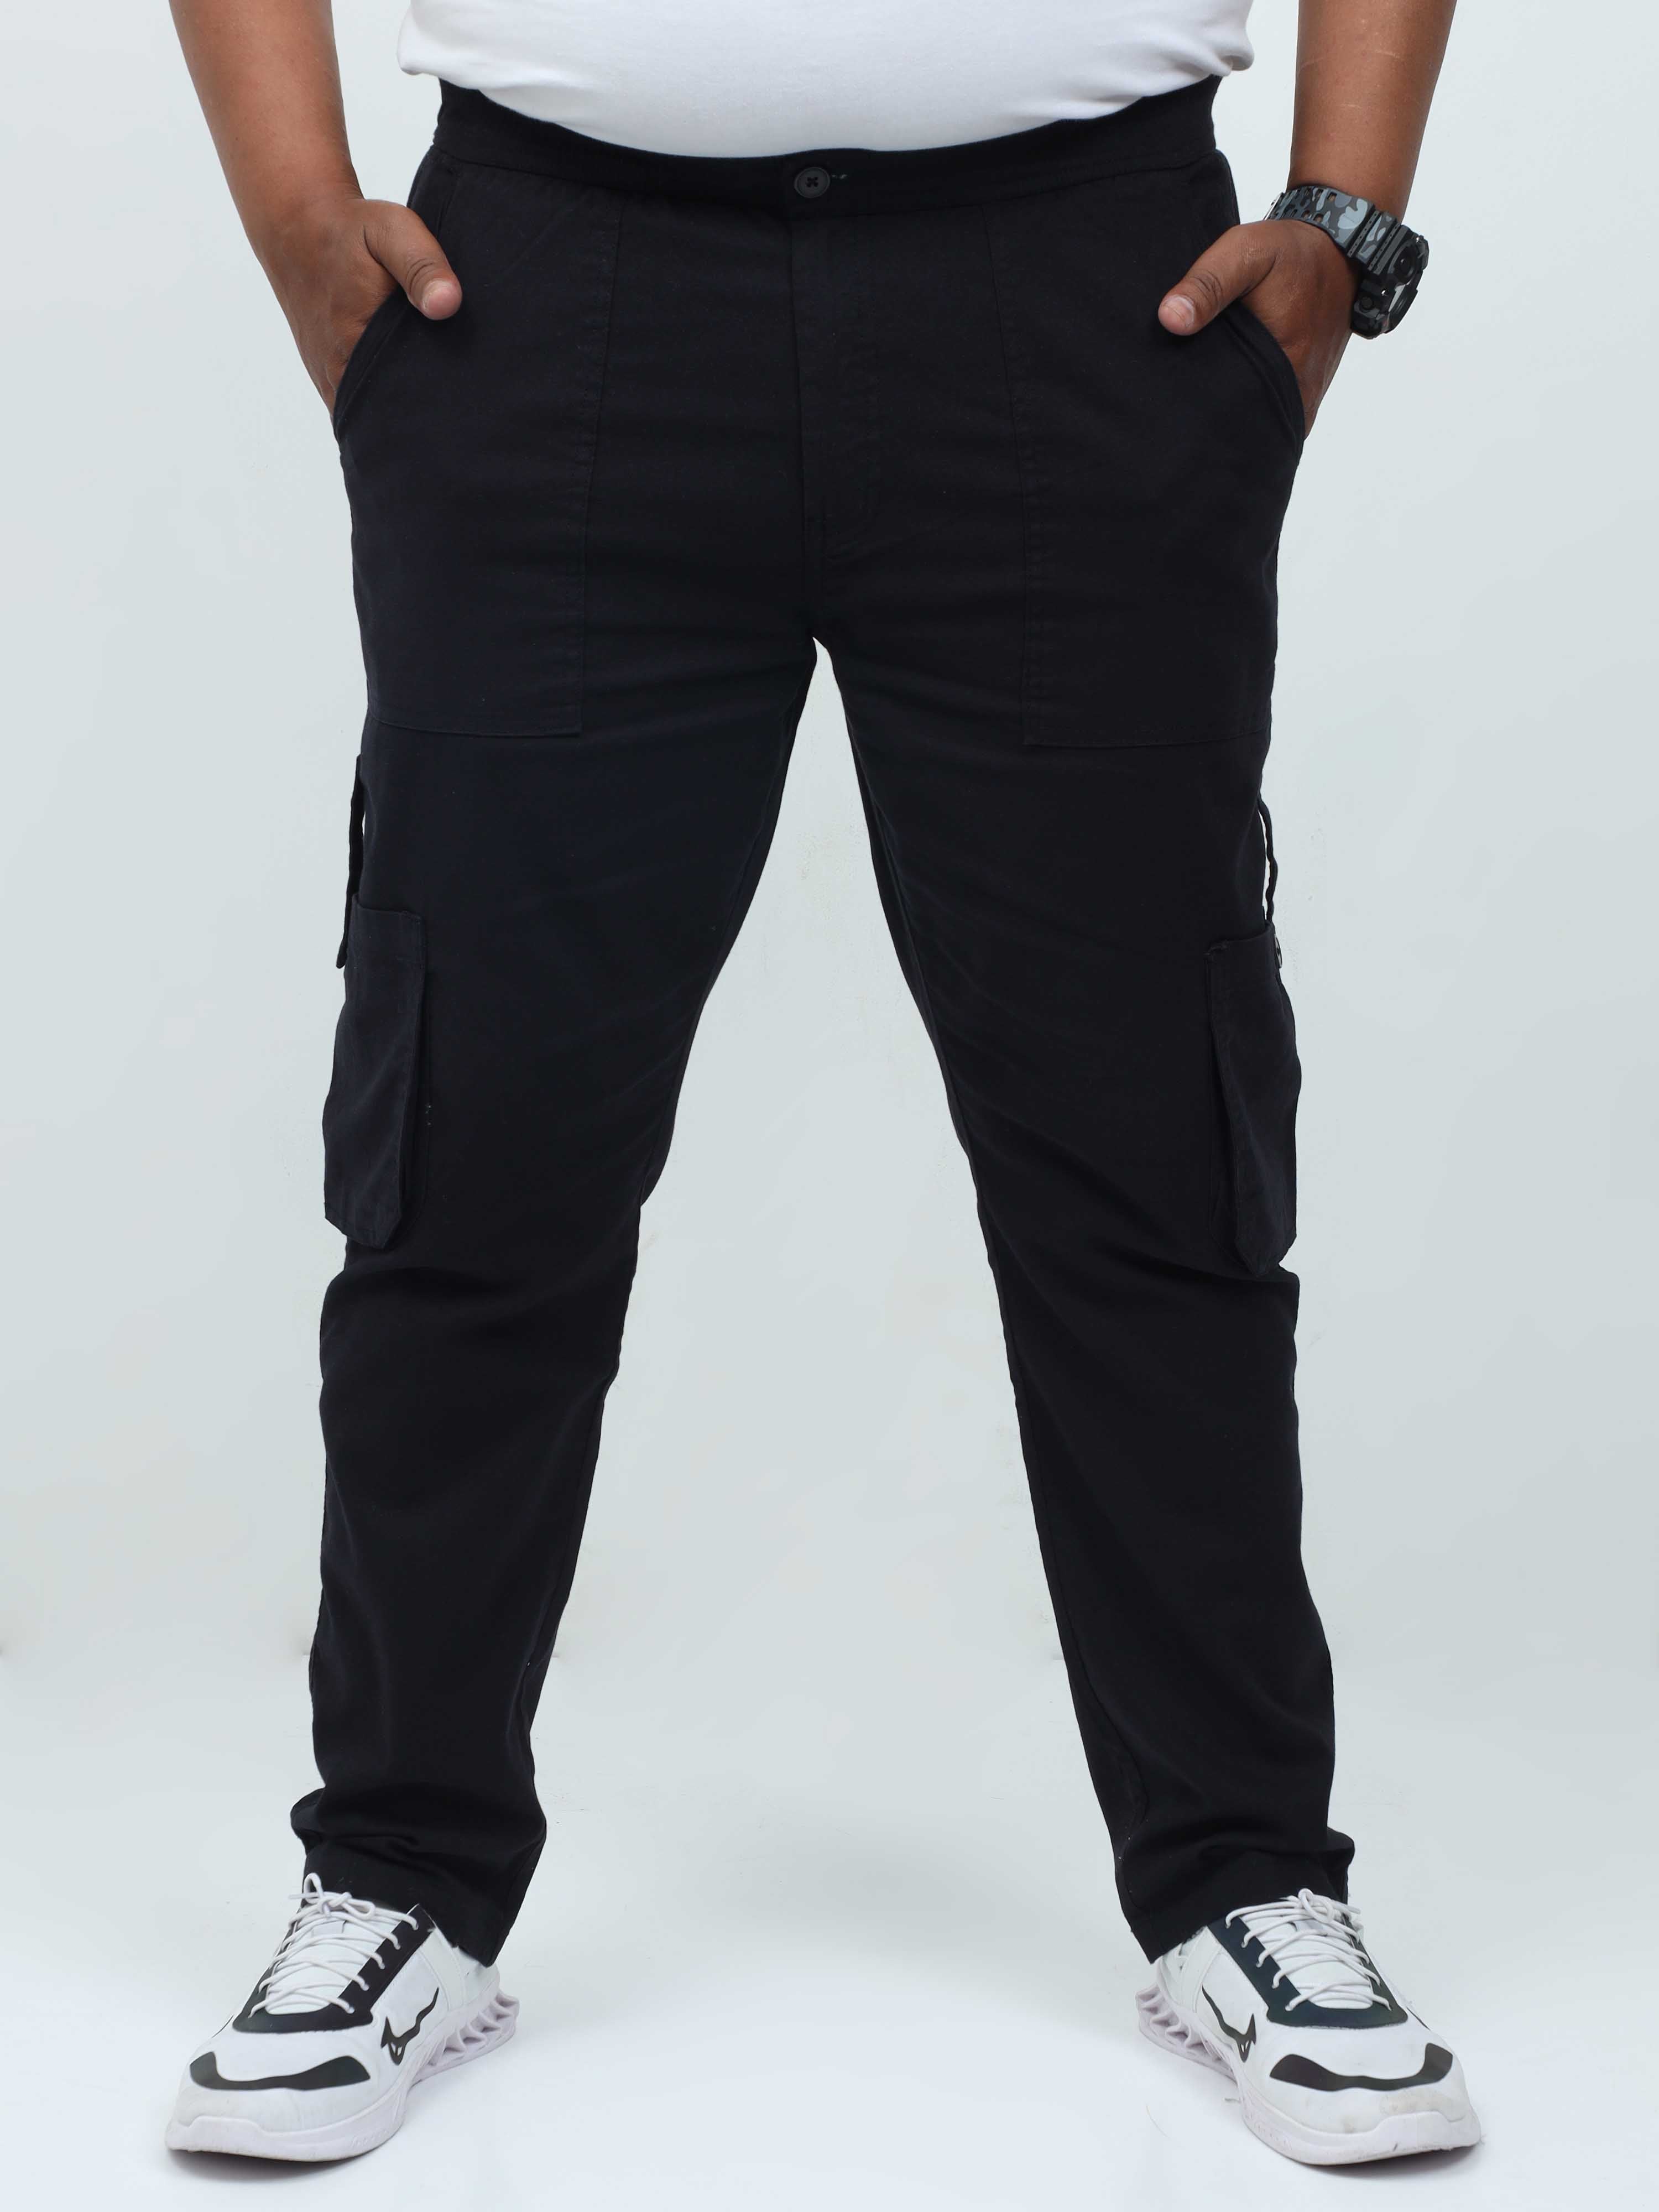 Black Cargo Pants Baggy | Urban Streetwear